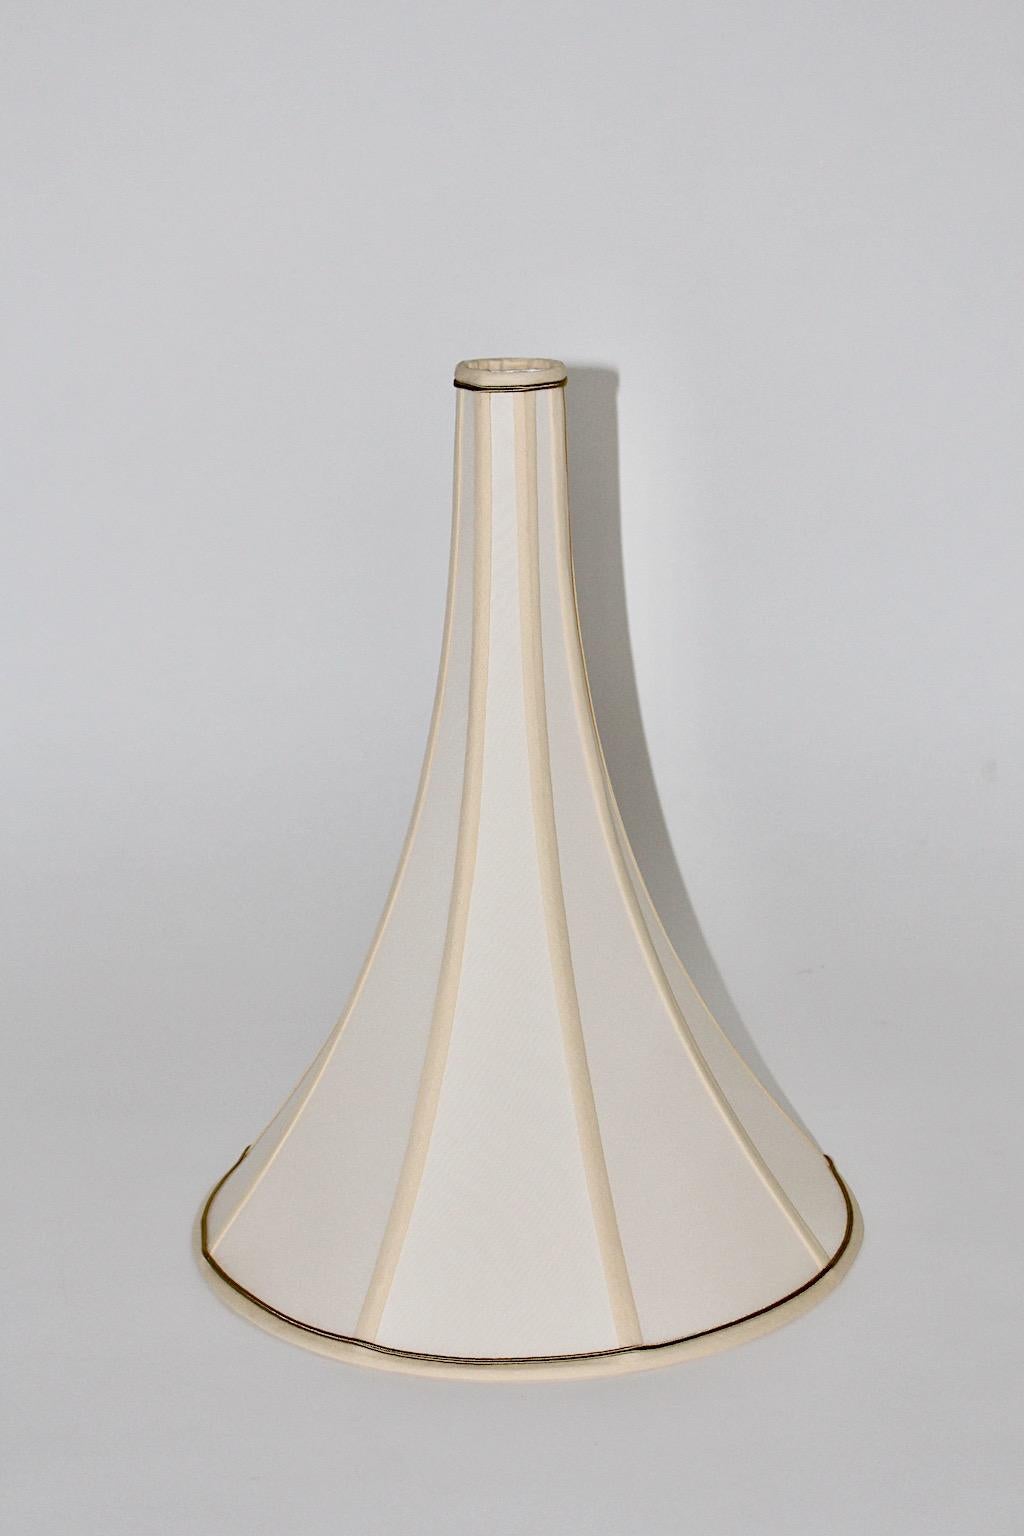 Art Deco Vintage Dagobert Peche Style Pagoda Brass Floor Lamp 1920s Austria For Sale 10